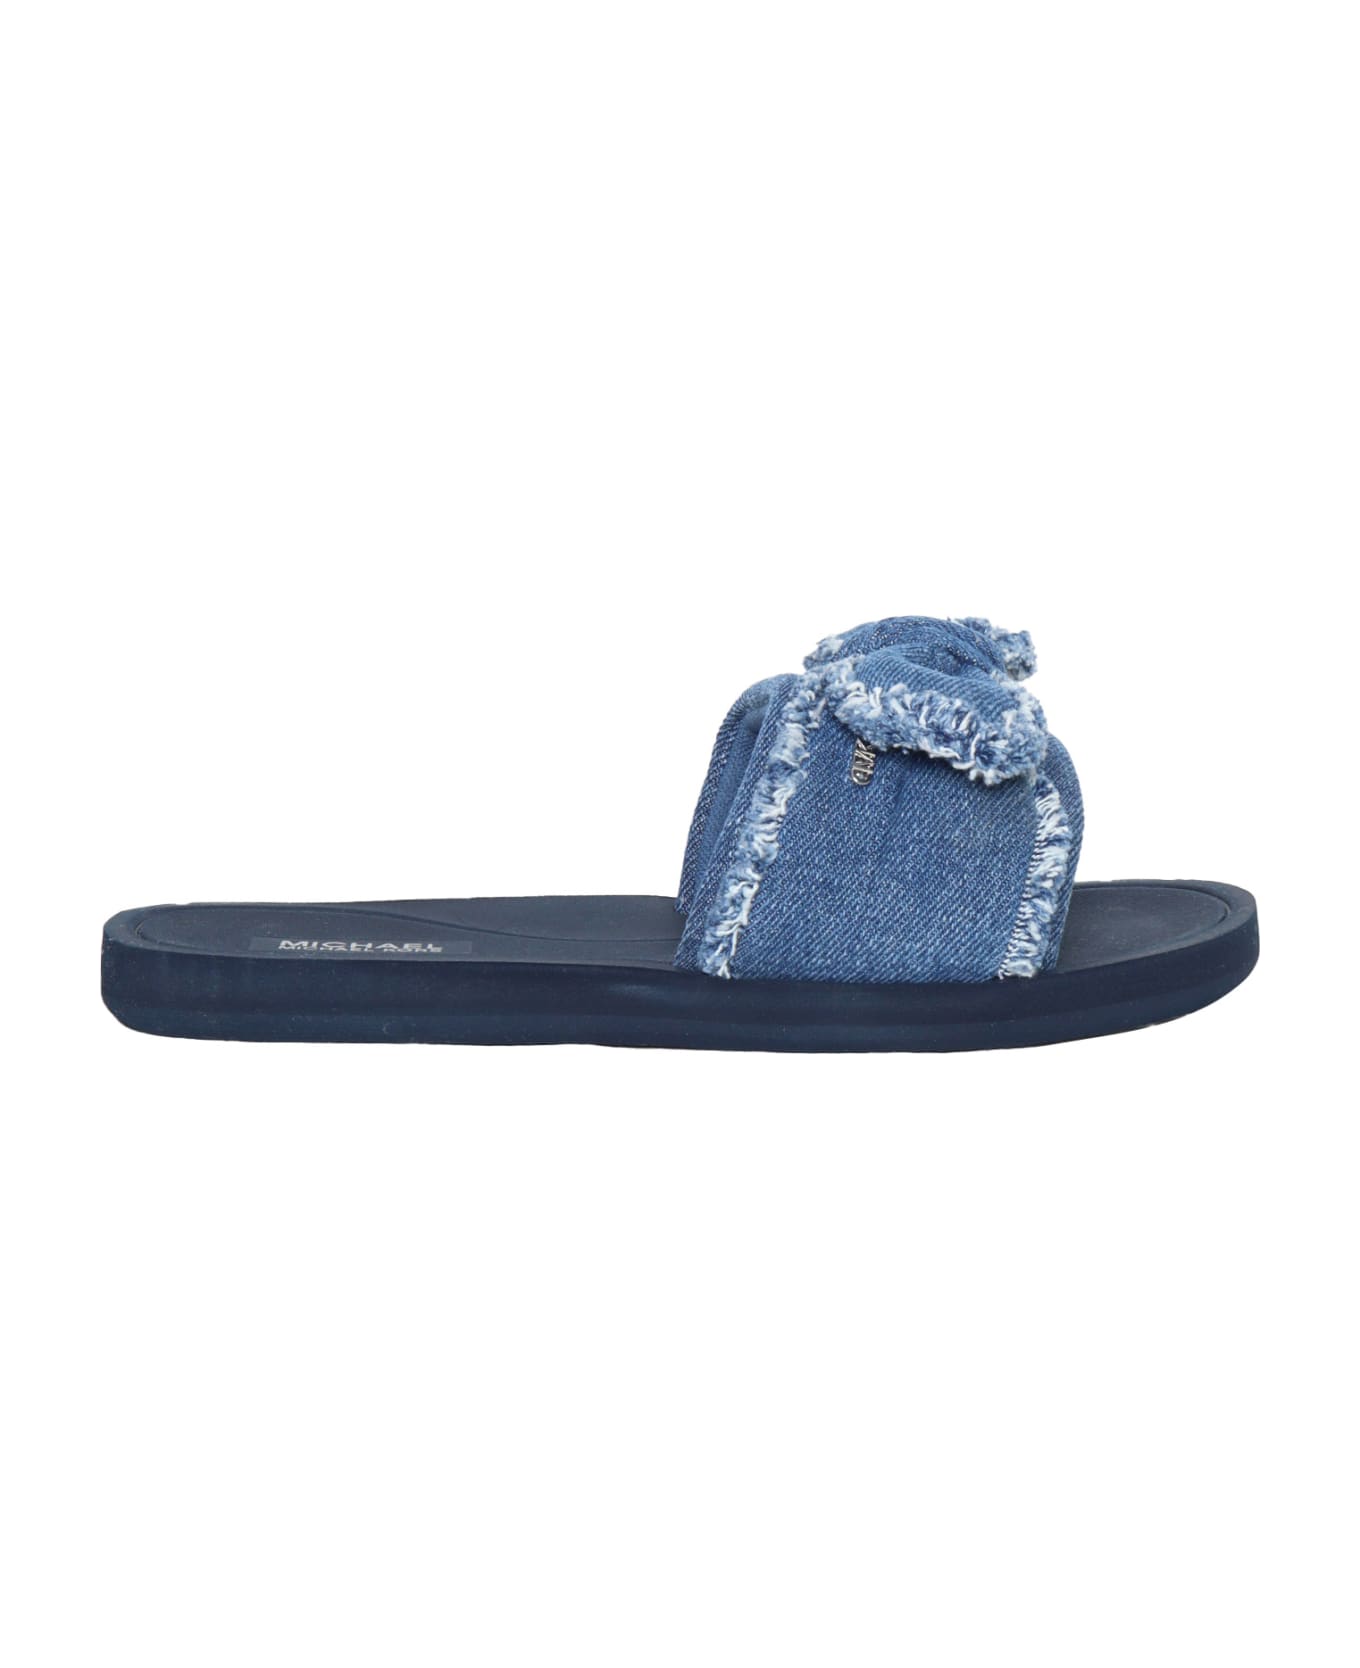 Michael Kors Low Denim Slippers - BLUE サンダル